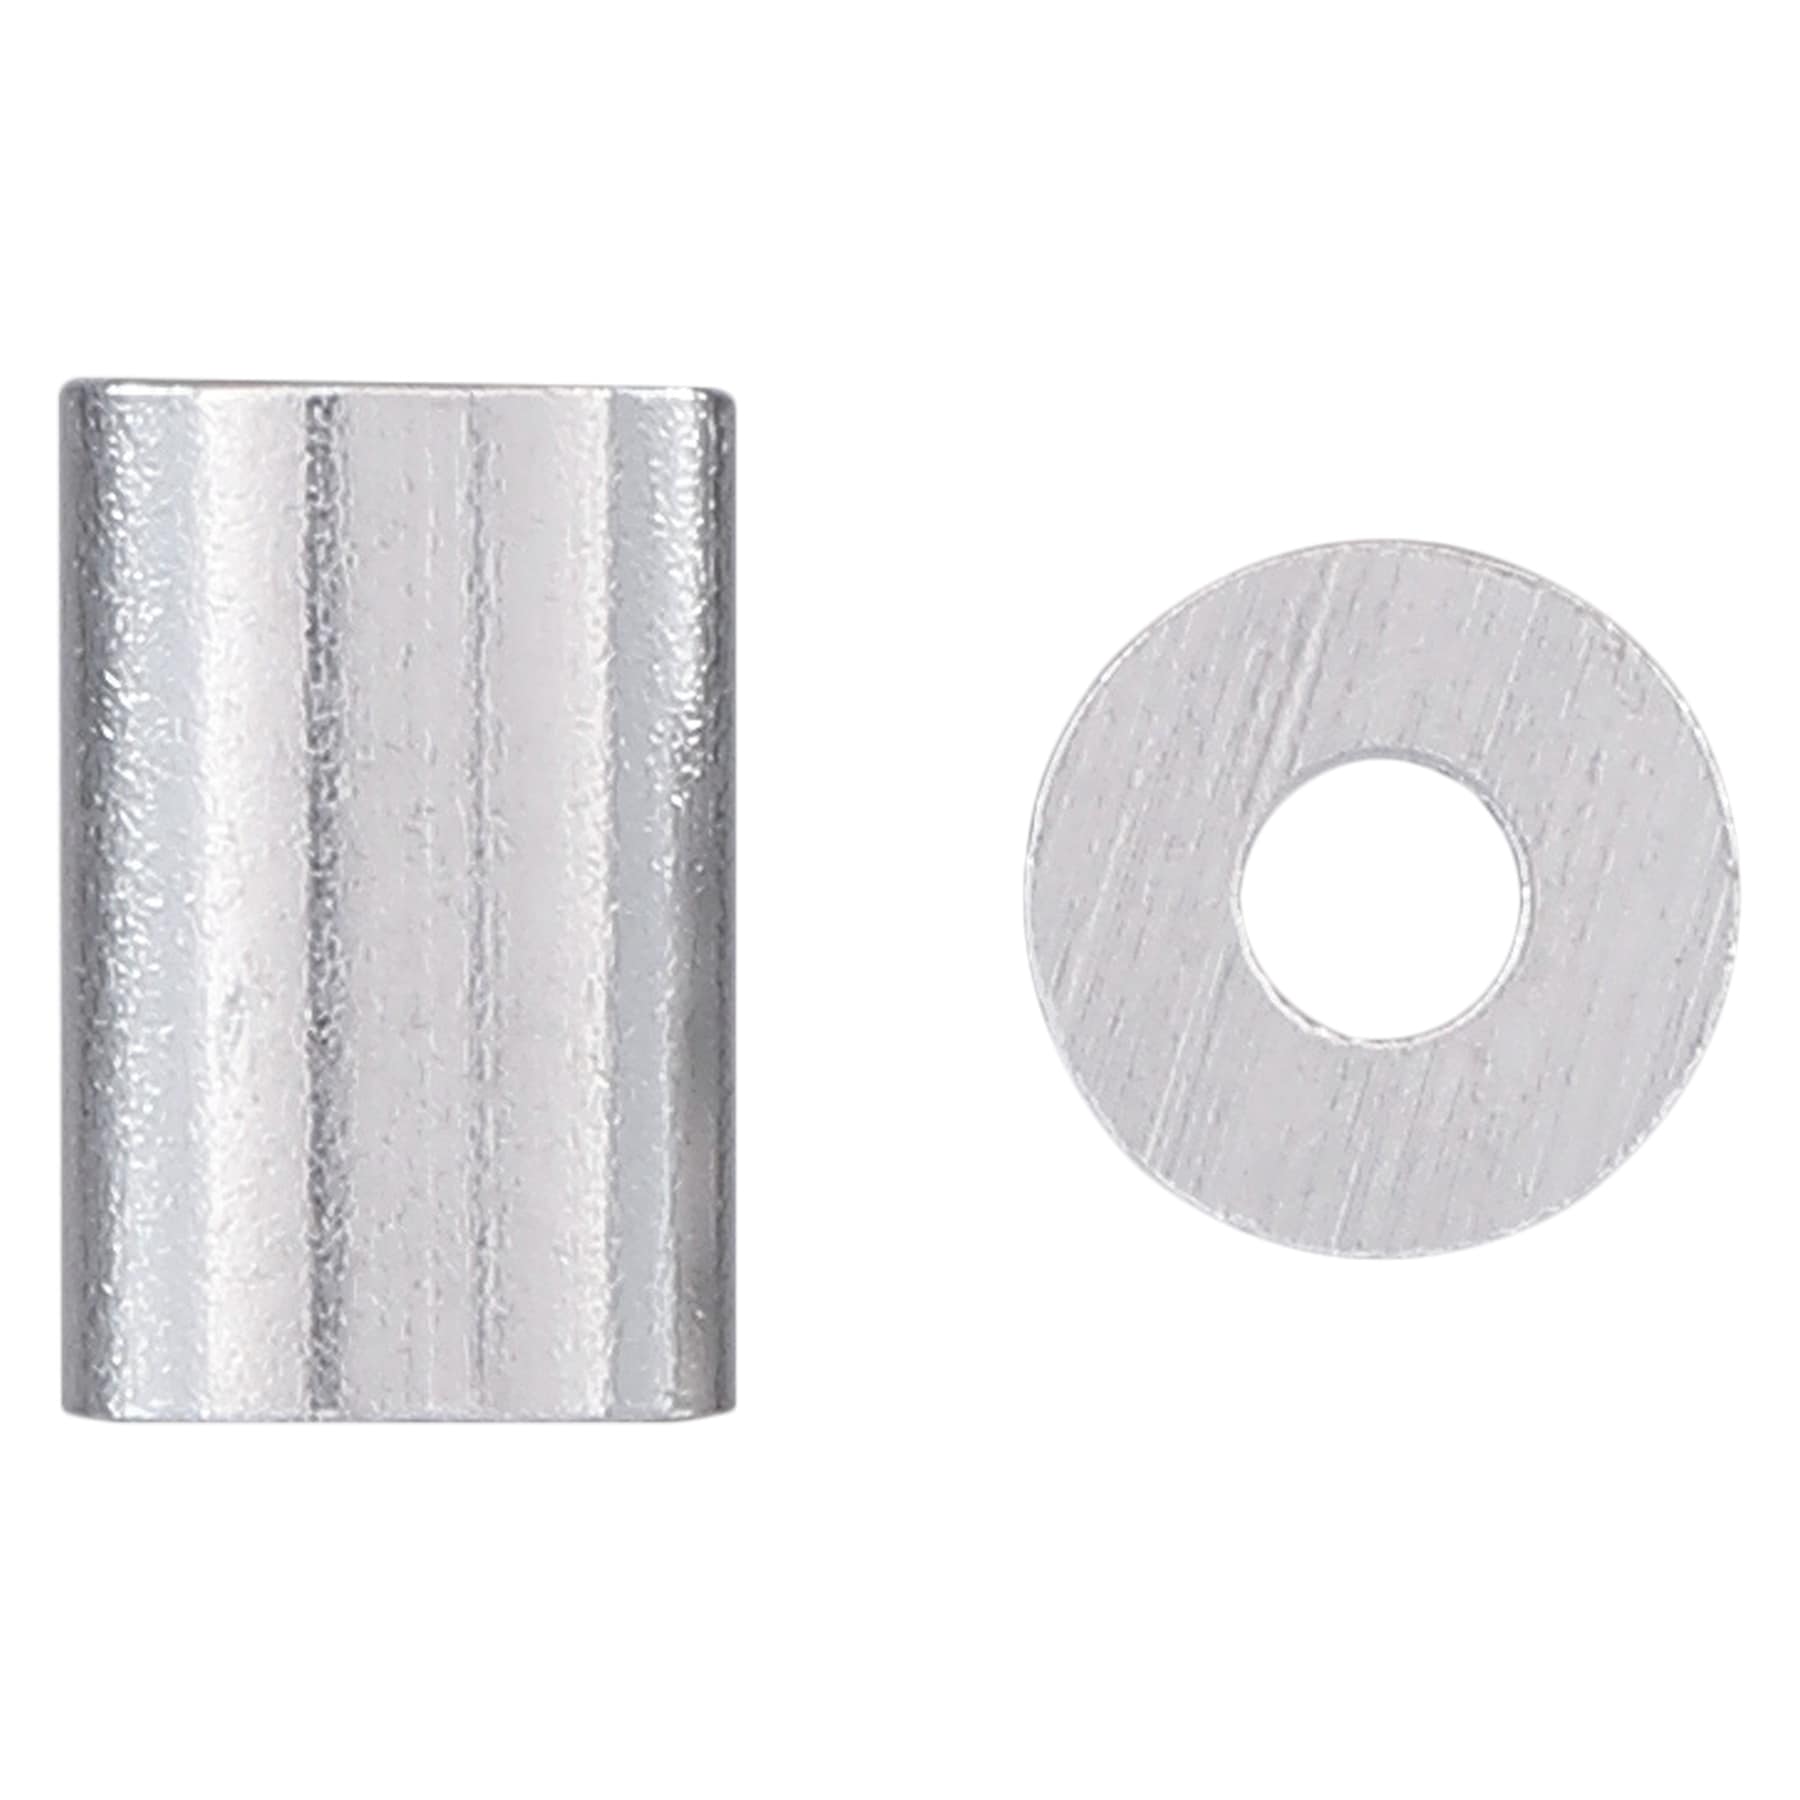 Ferrule C 11, conical, Aluminium, for 10-11mm wires